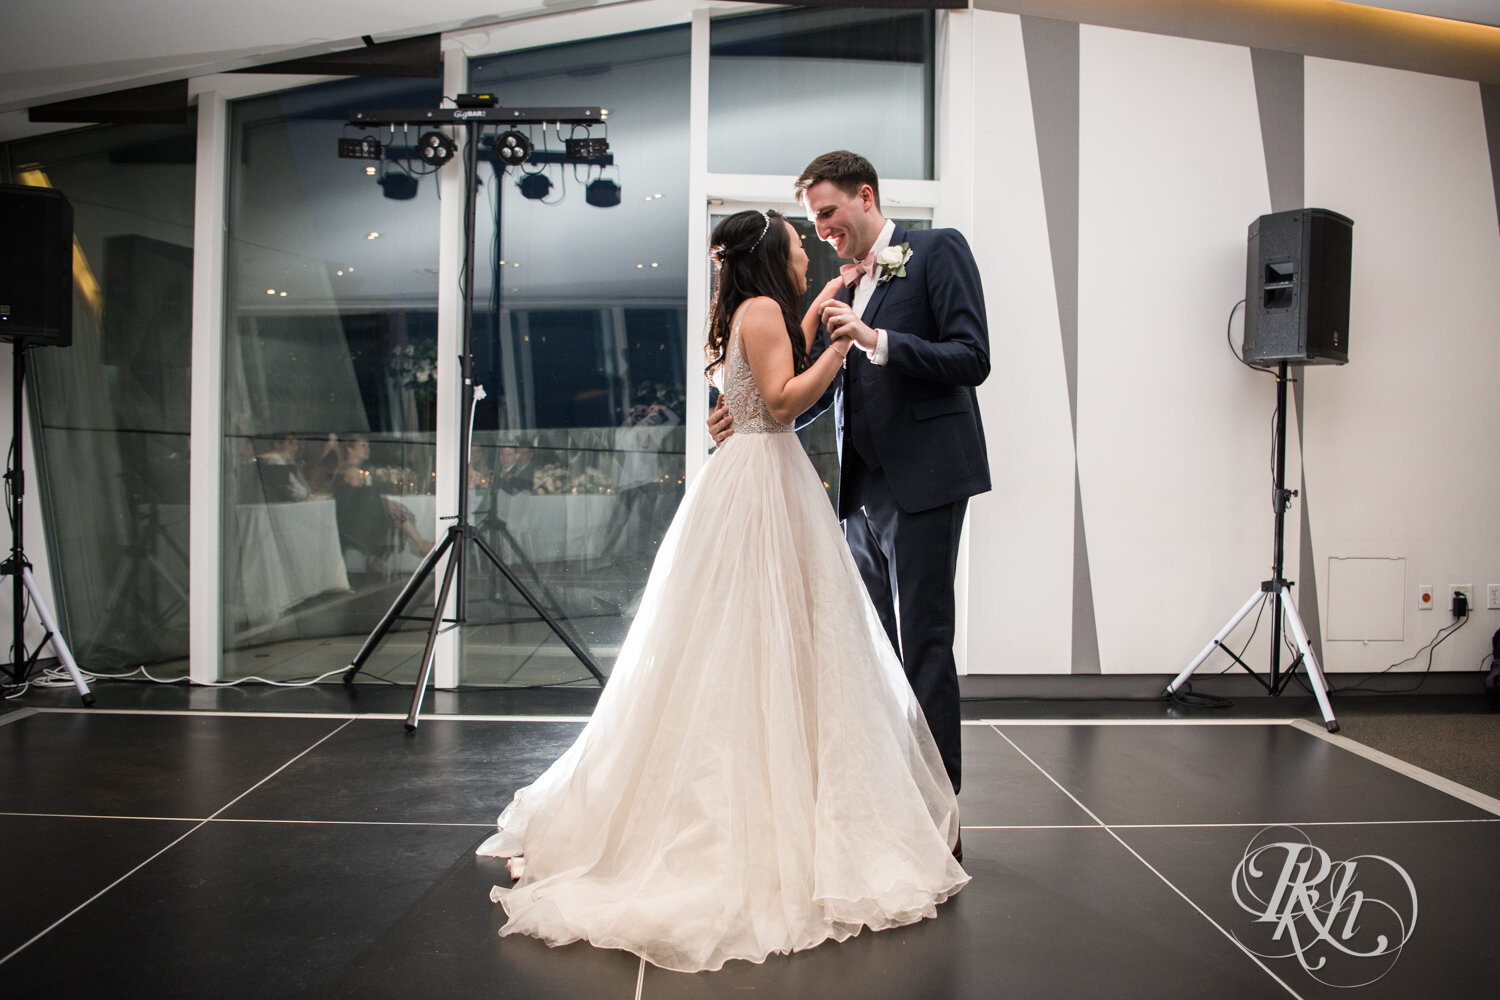 Asian bride and groom dance during wedding reception at Walker Art Center in Minneapolis, Minnesota. 